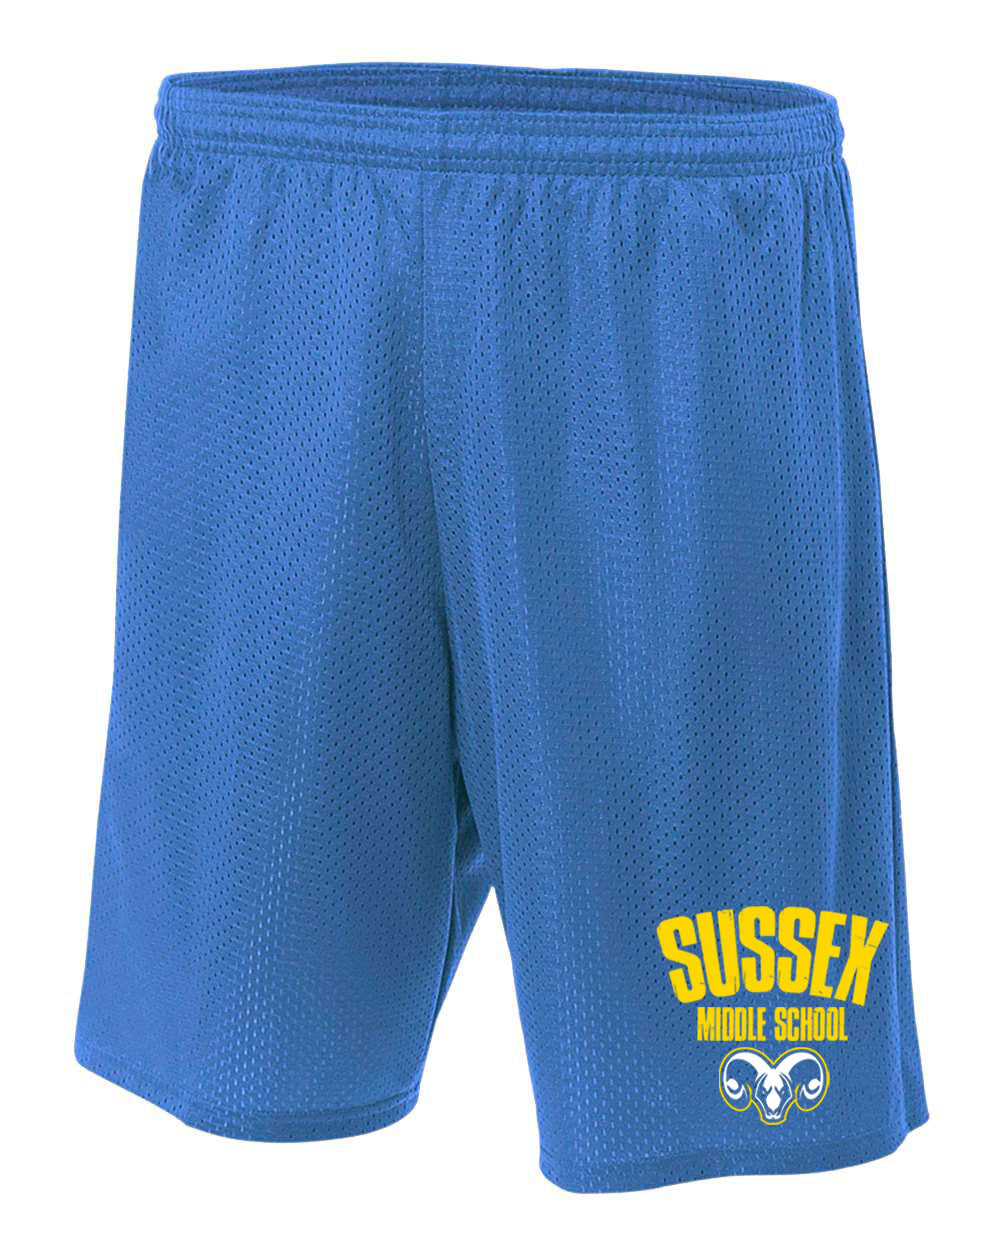 Sussex Middle Design 4 Mesh Shorts